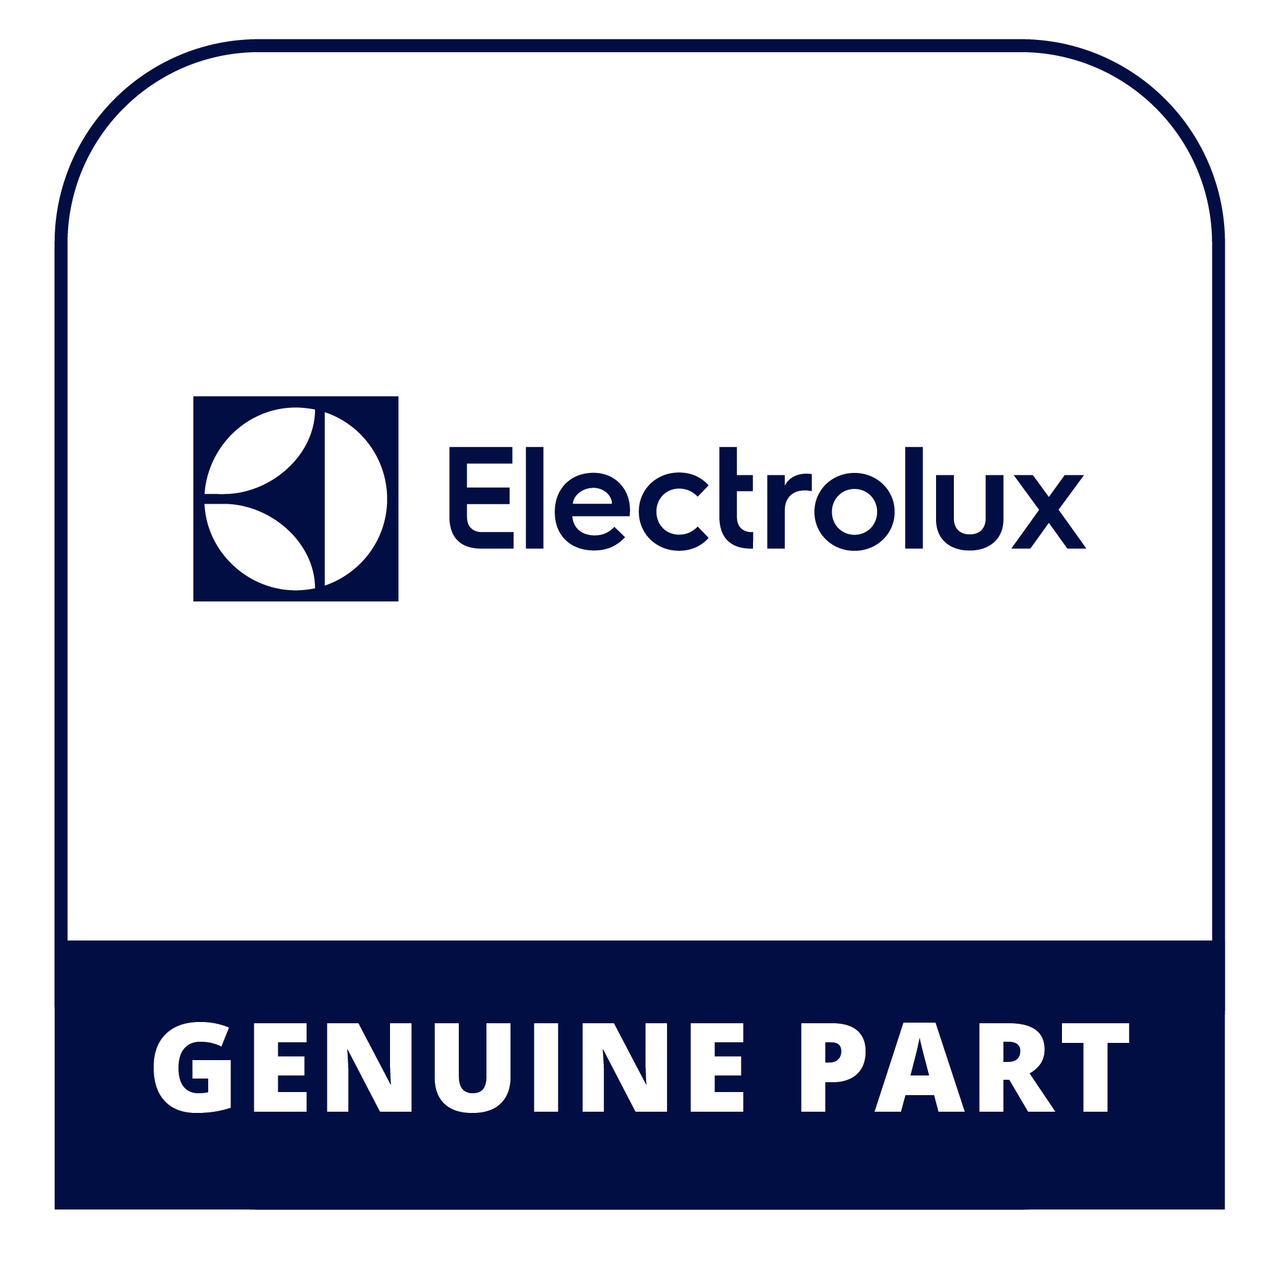 Frigidaire - Electrolux 3204401 - Agitator - Genuine Electrolux Part